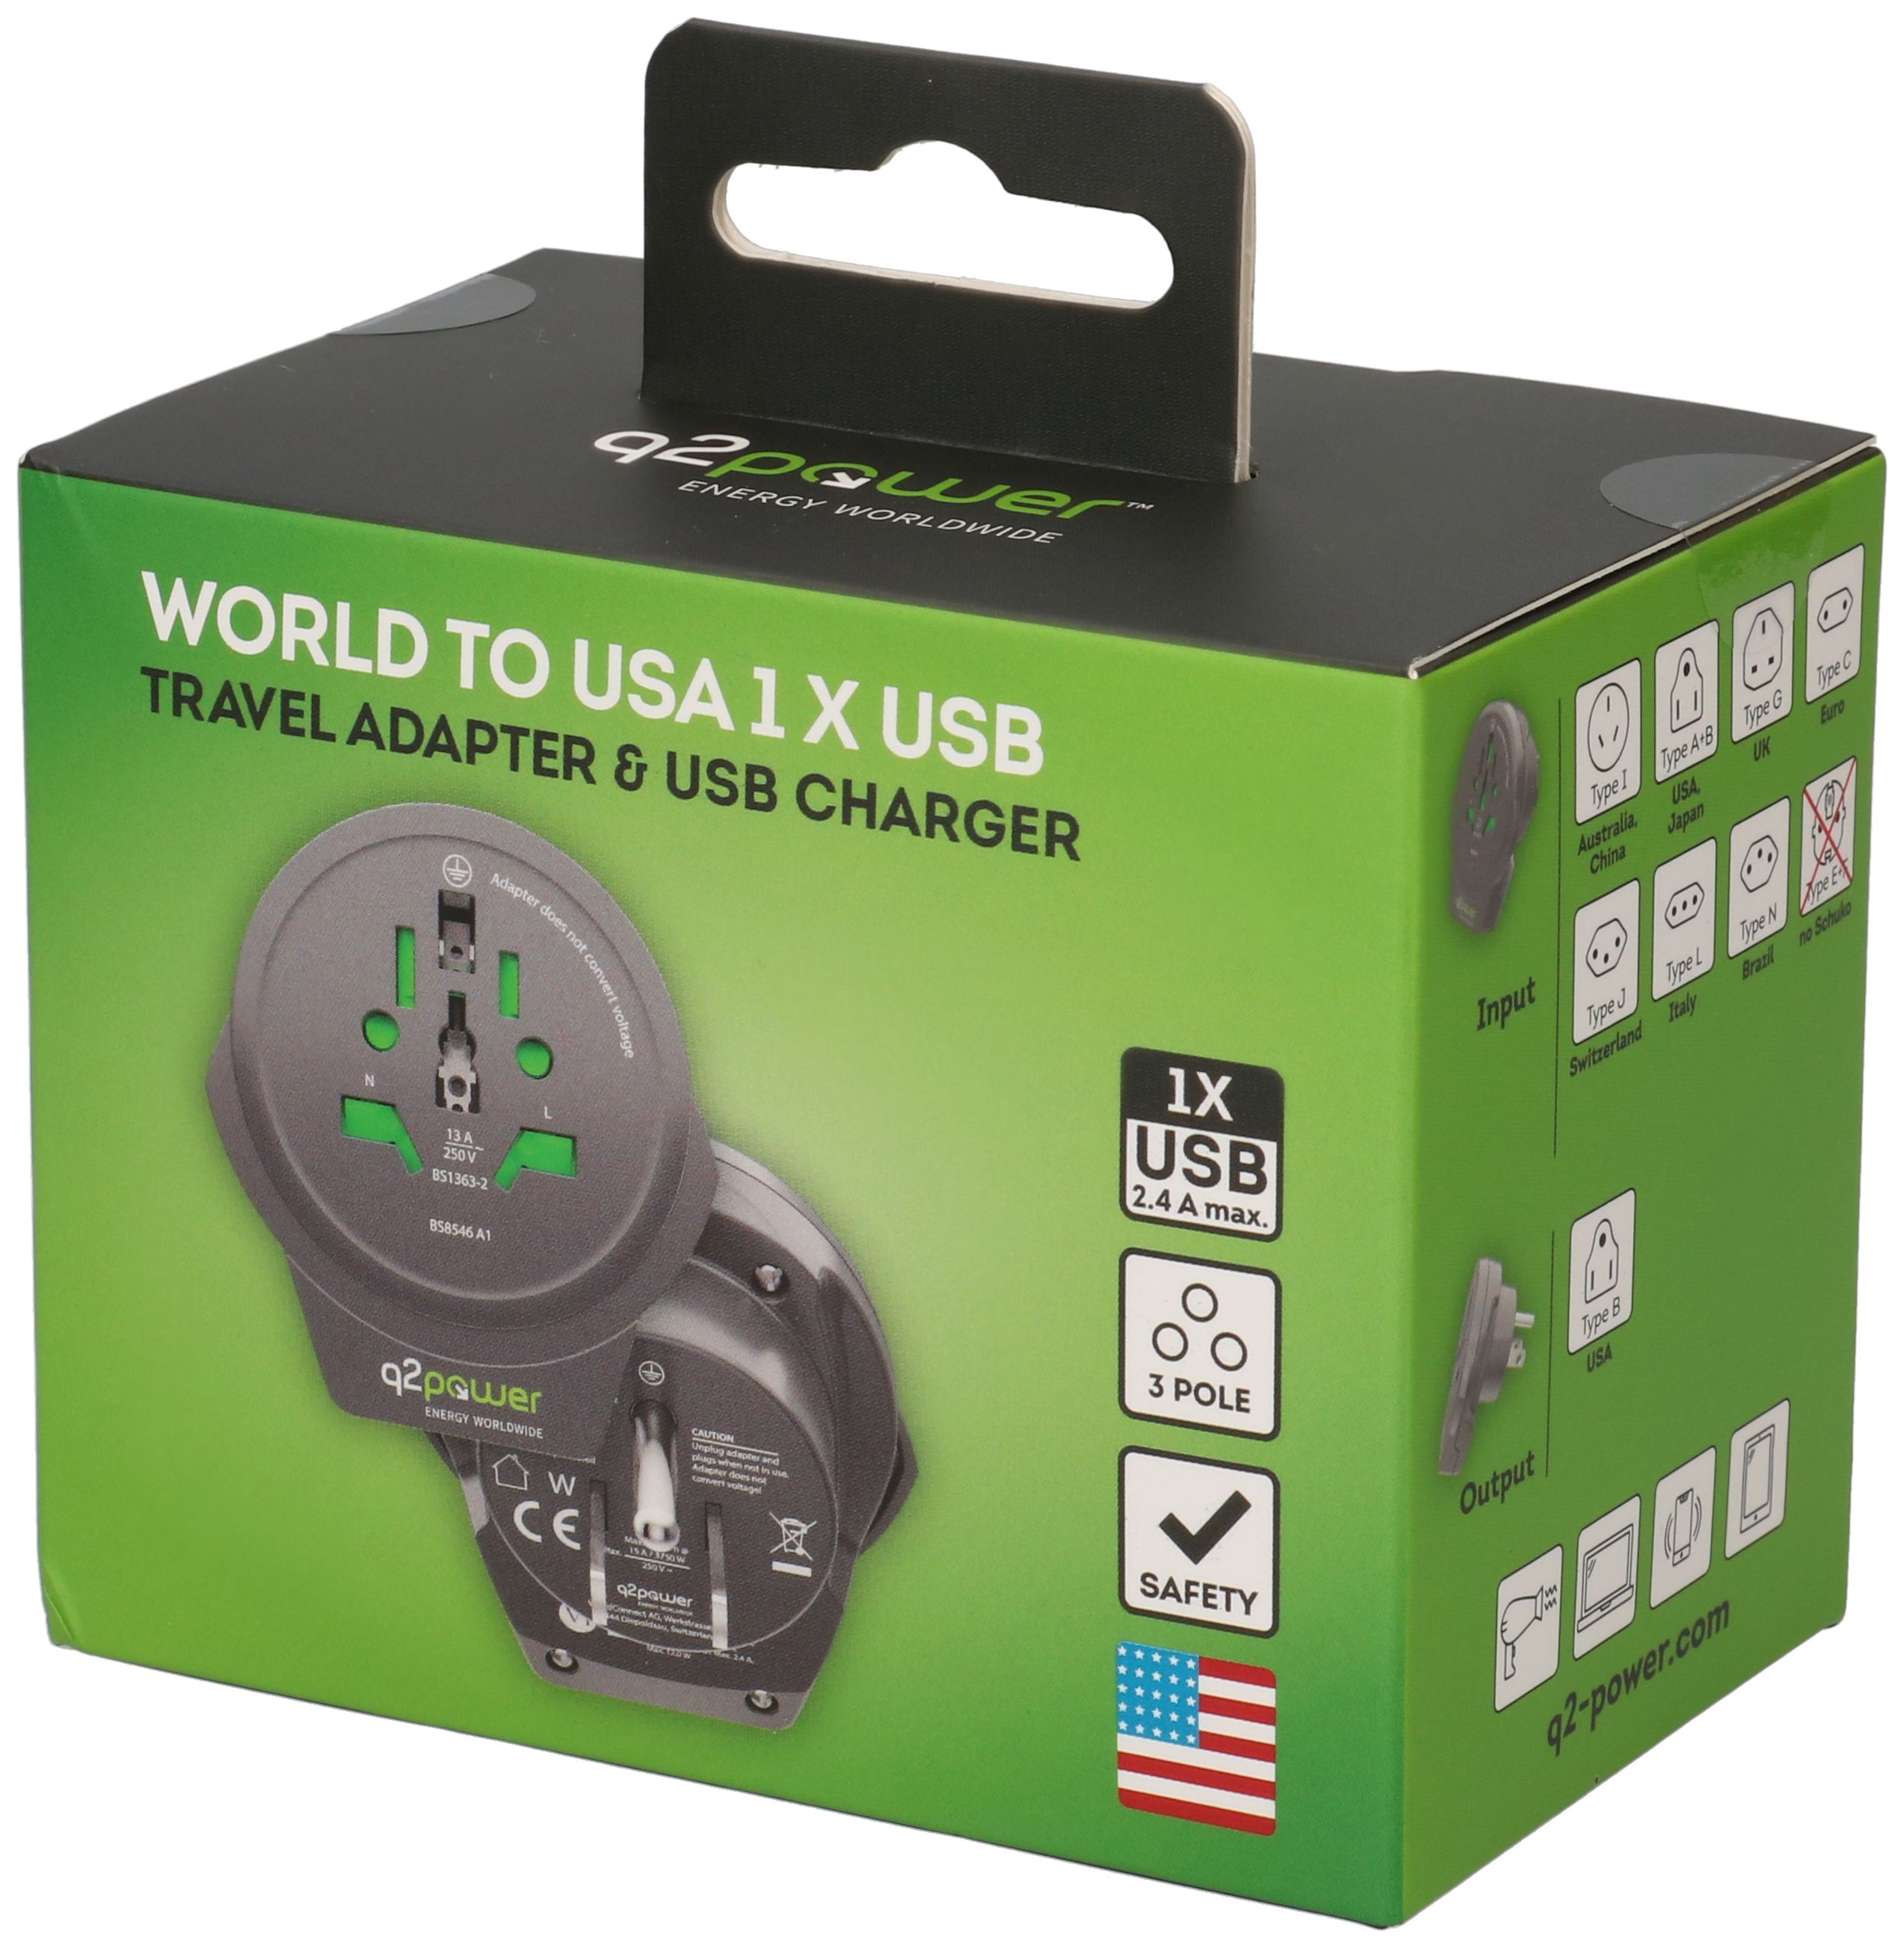 Q2 Power adaptateur mondial USA - USB